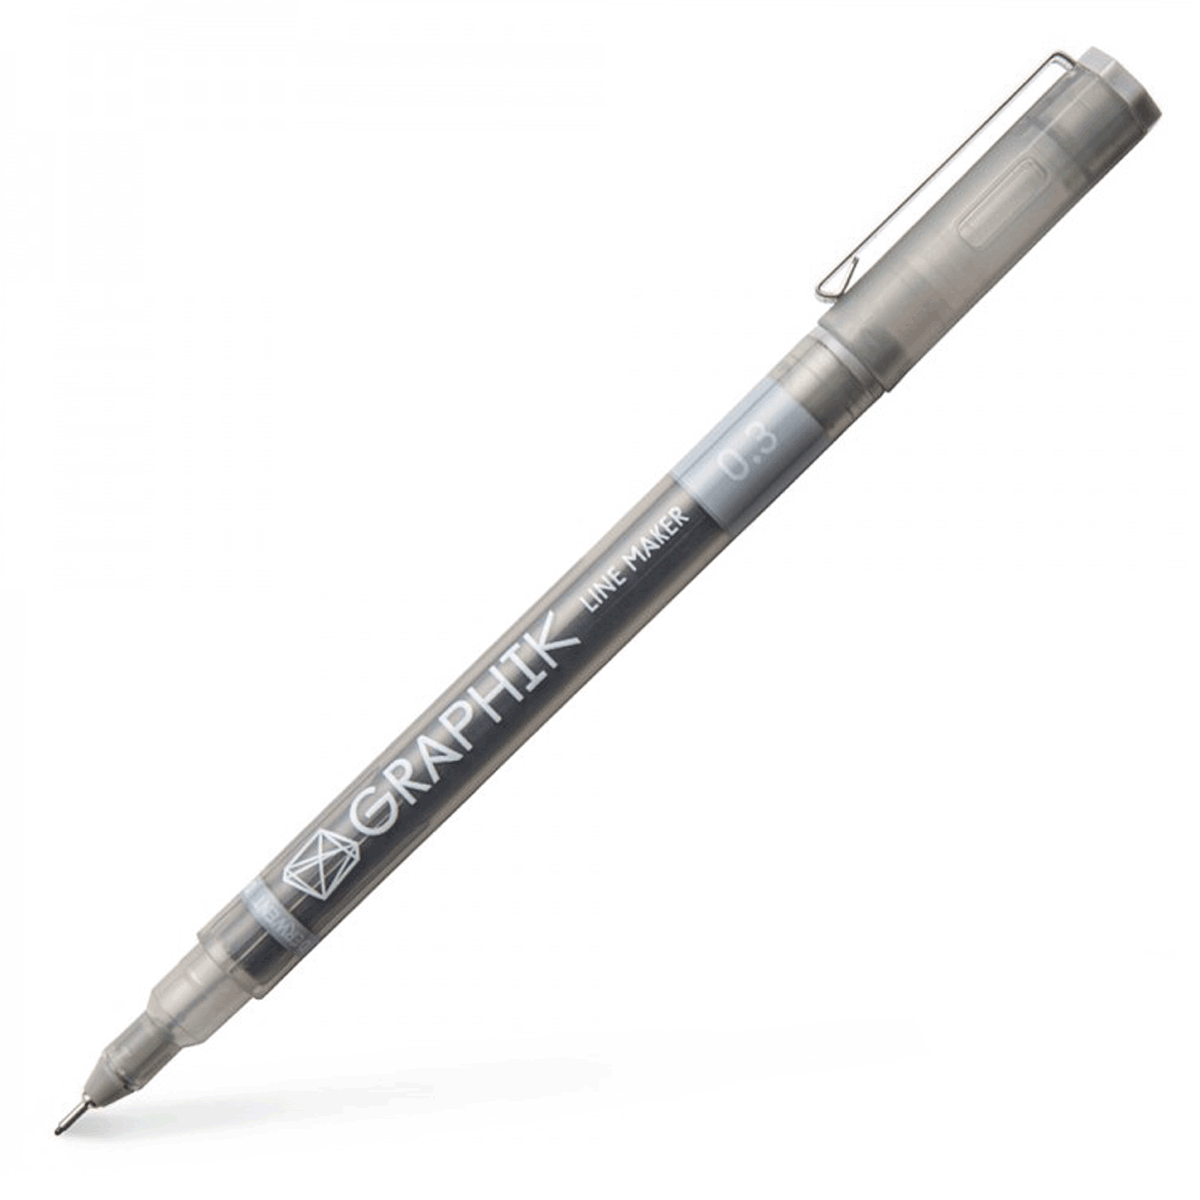 Derwent Graphik Line Maker Pen - Graphite 0.3